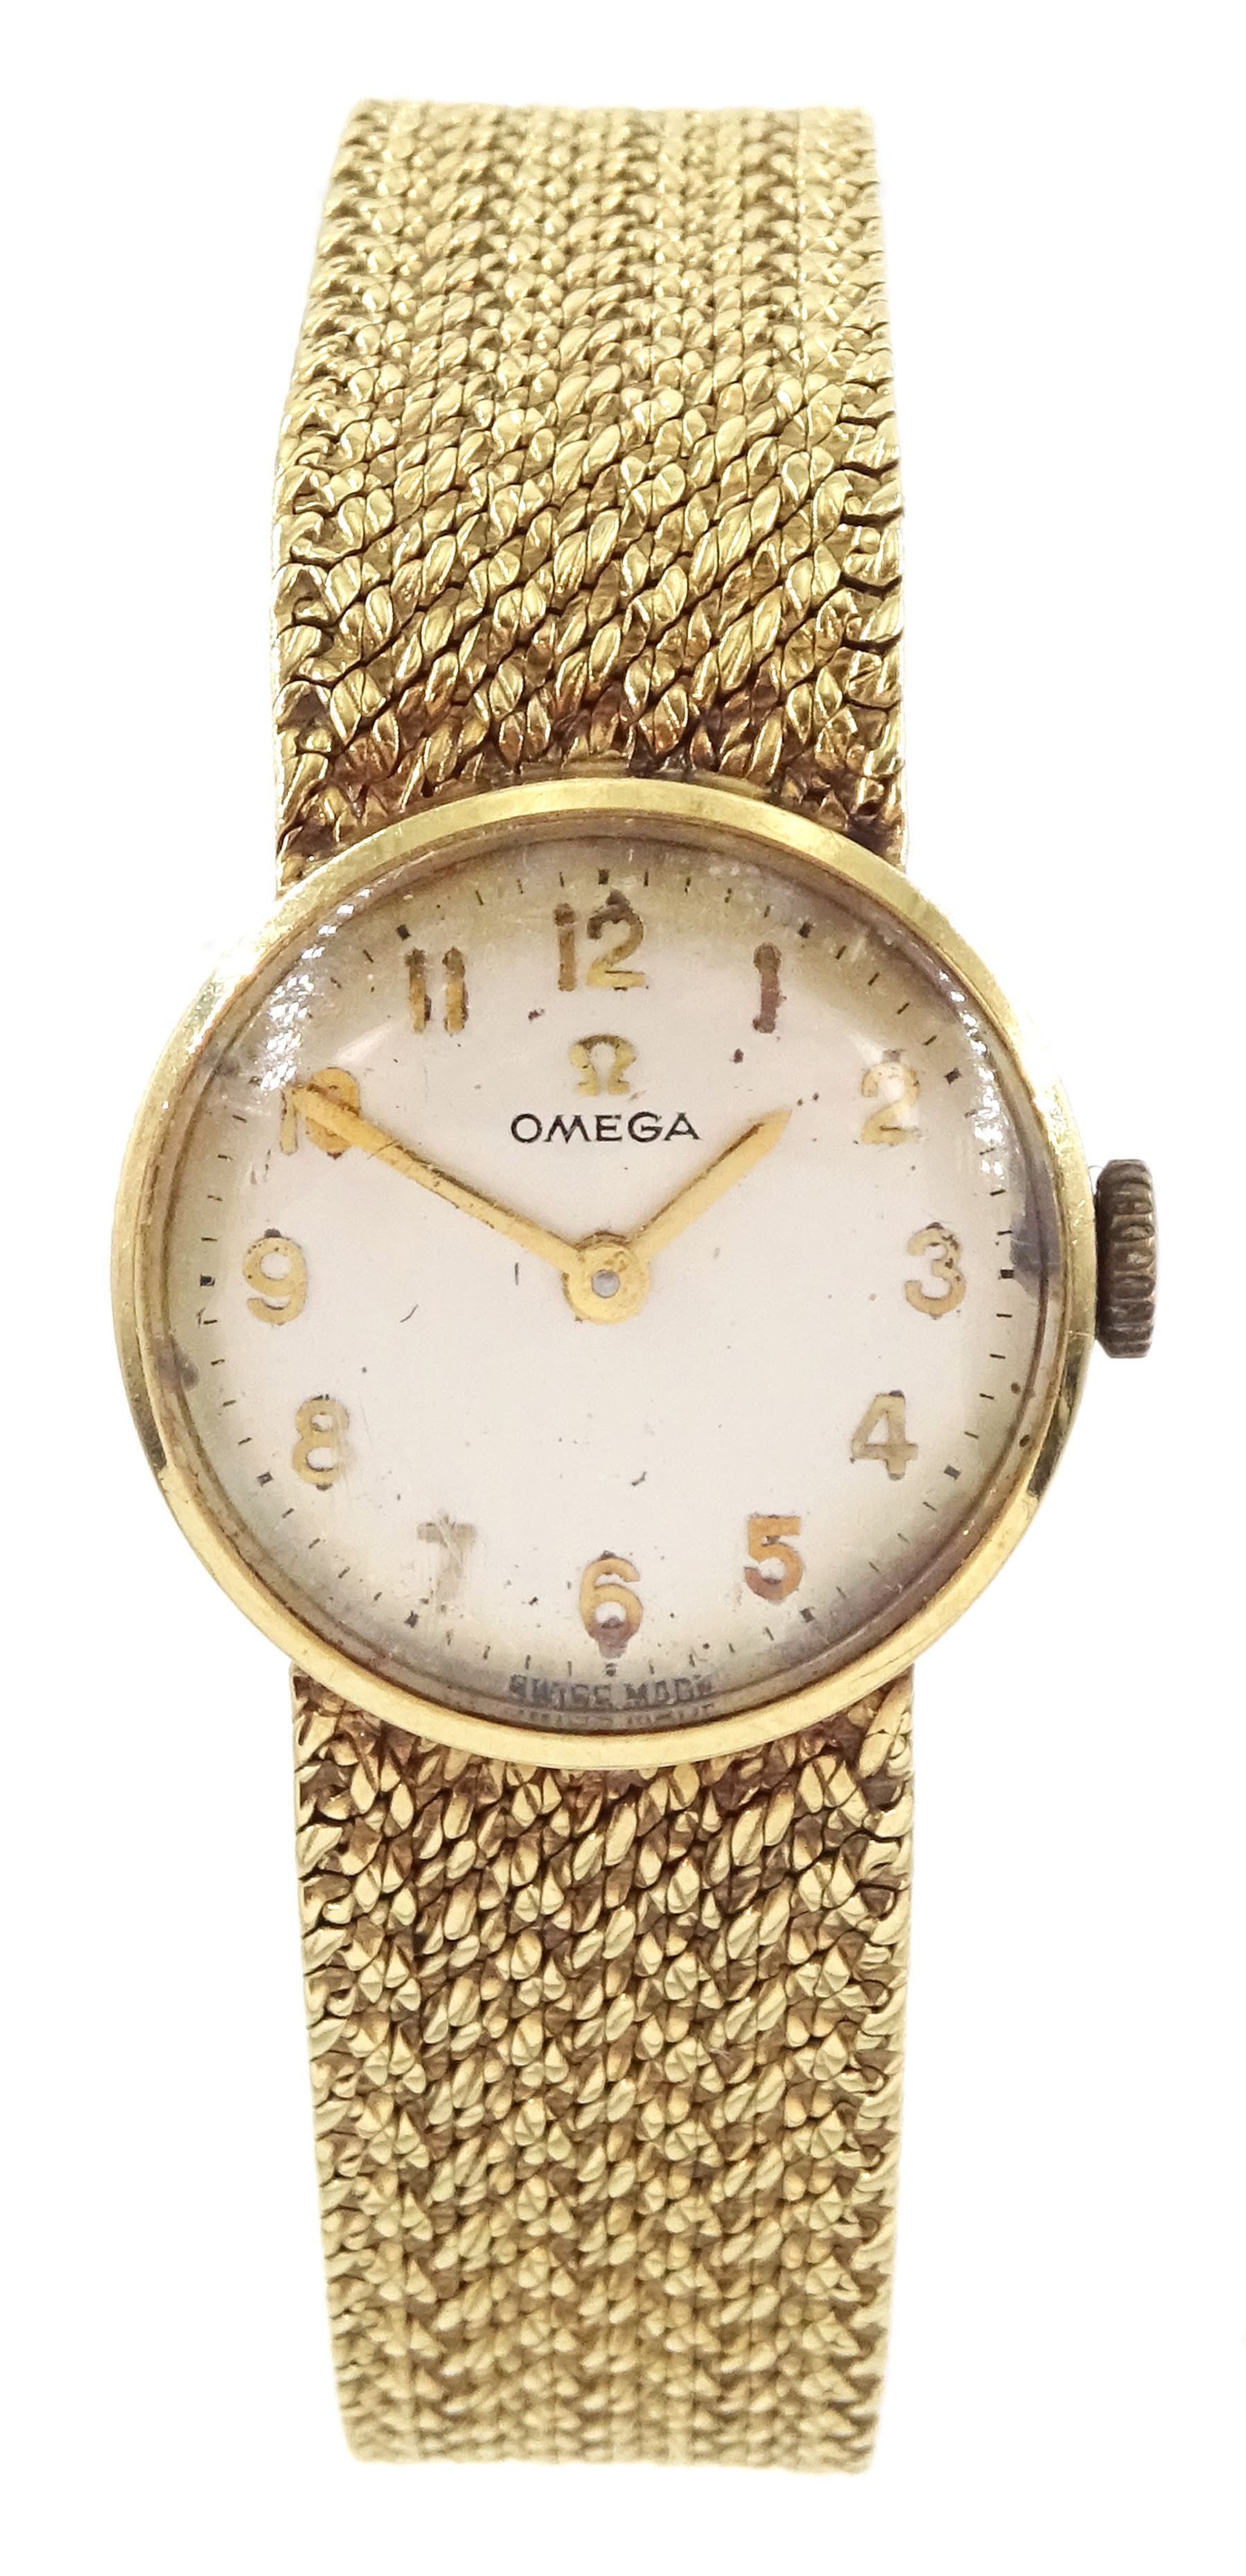 Omega ladies 9ct gold manual wind wristwatch